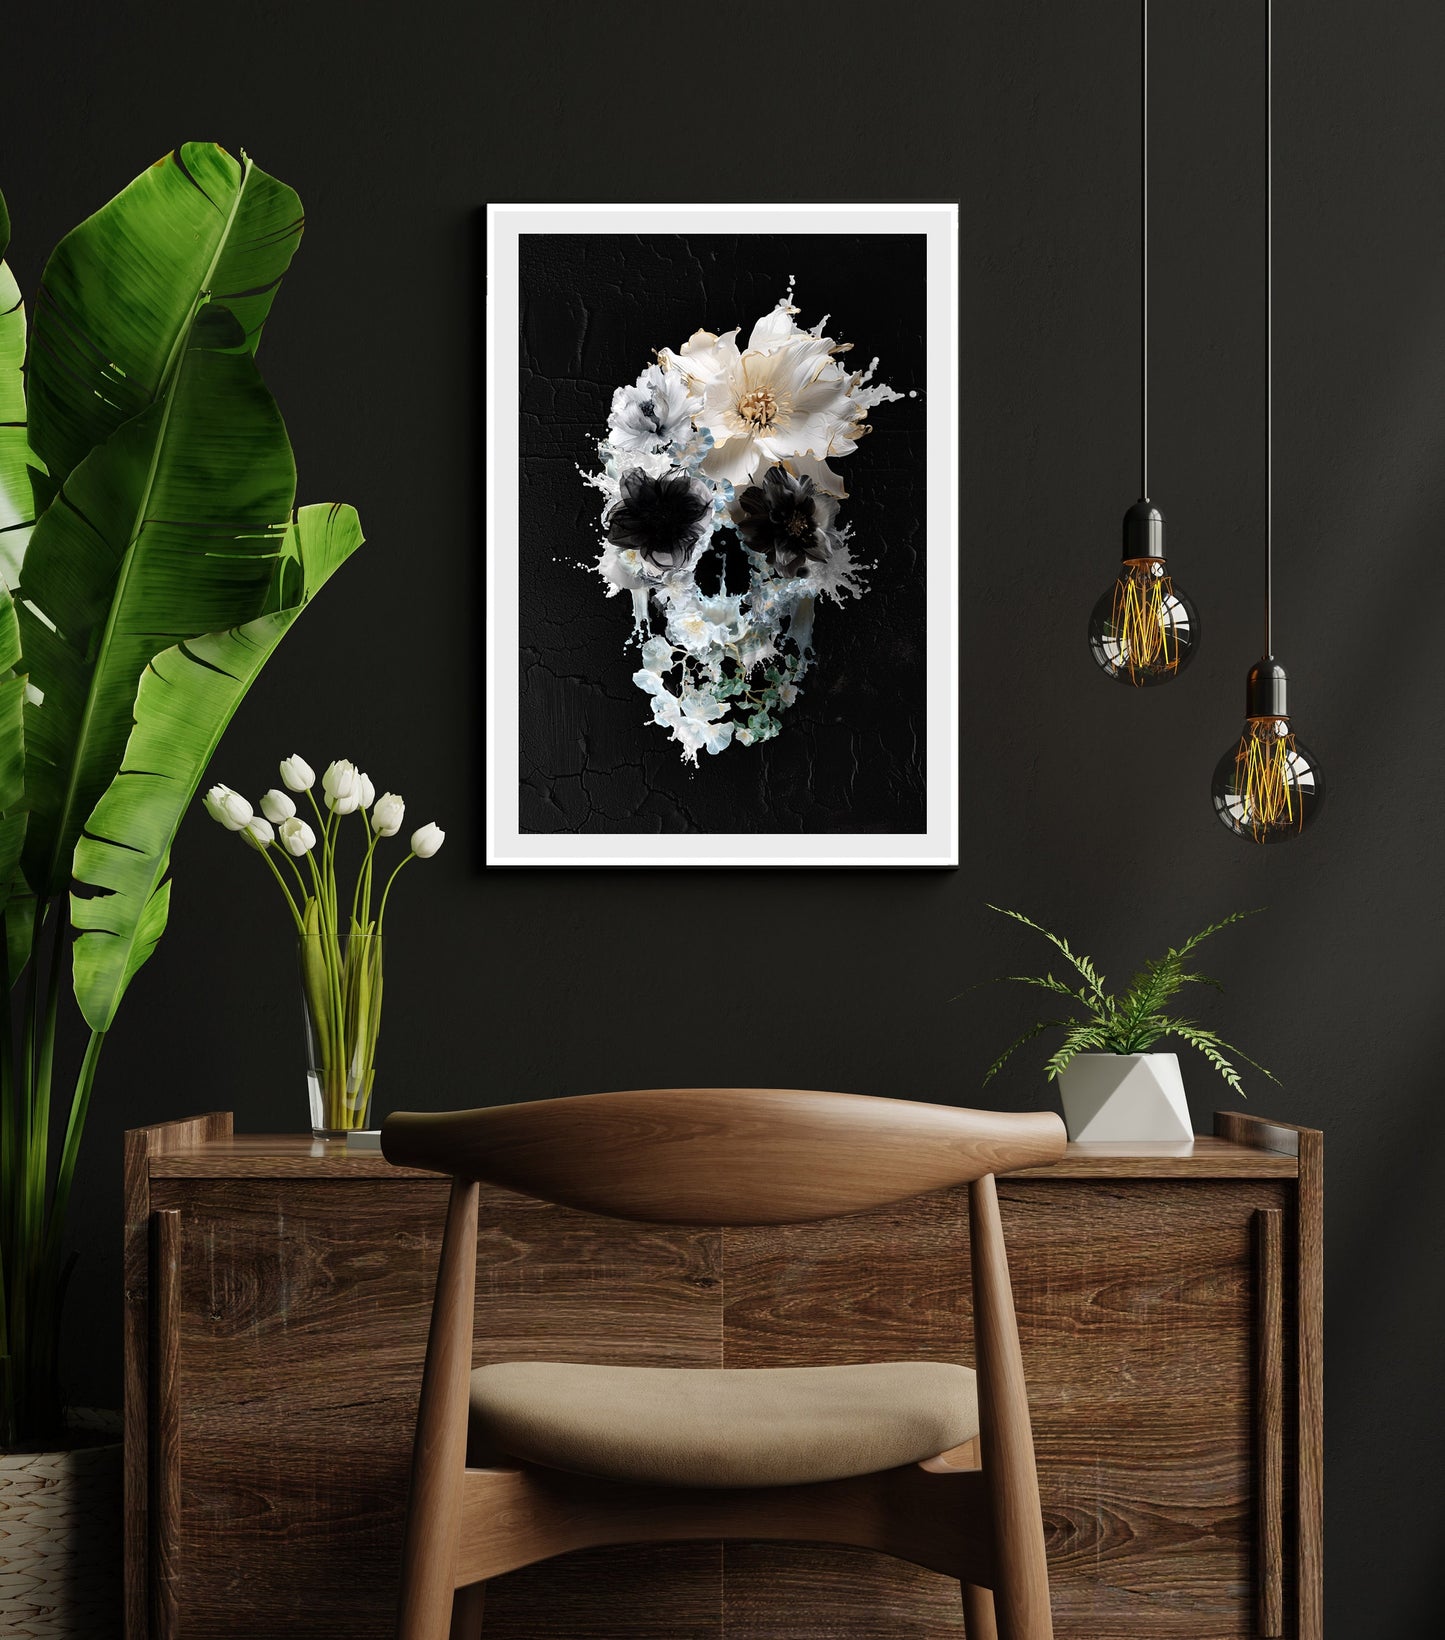 Bloom Skull Poster, Sugar Skull Art Print, Black And White Skull Wall Art, Skull Gift, Skull Illusion Home Decor, Illustration by Ali Gulec